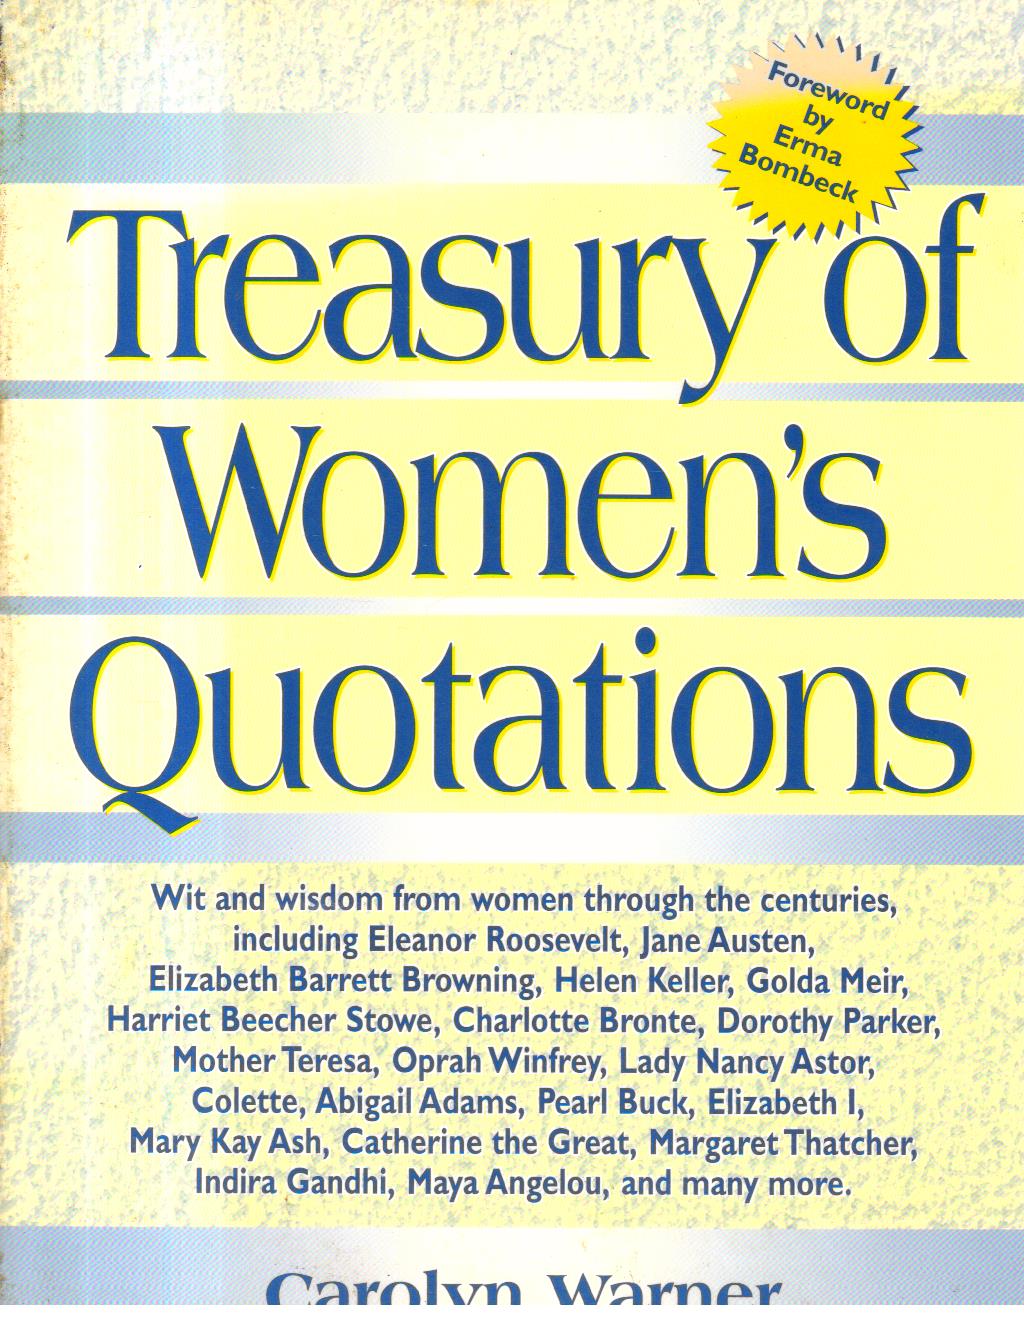 Treasury of Women's Quotations.